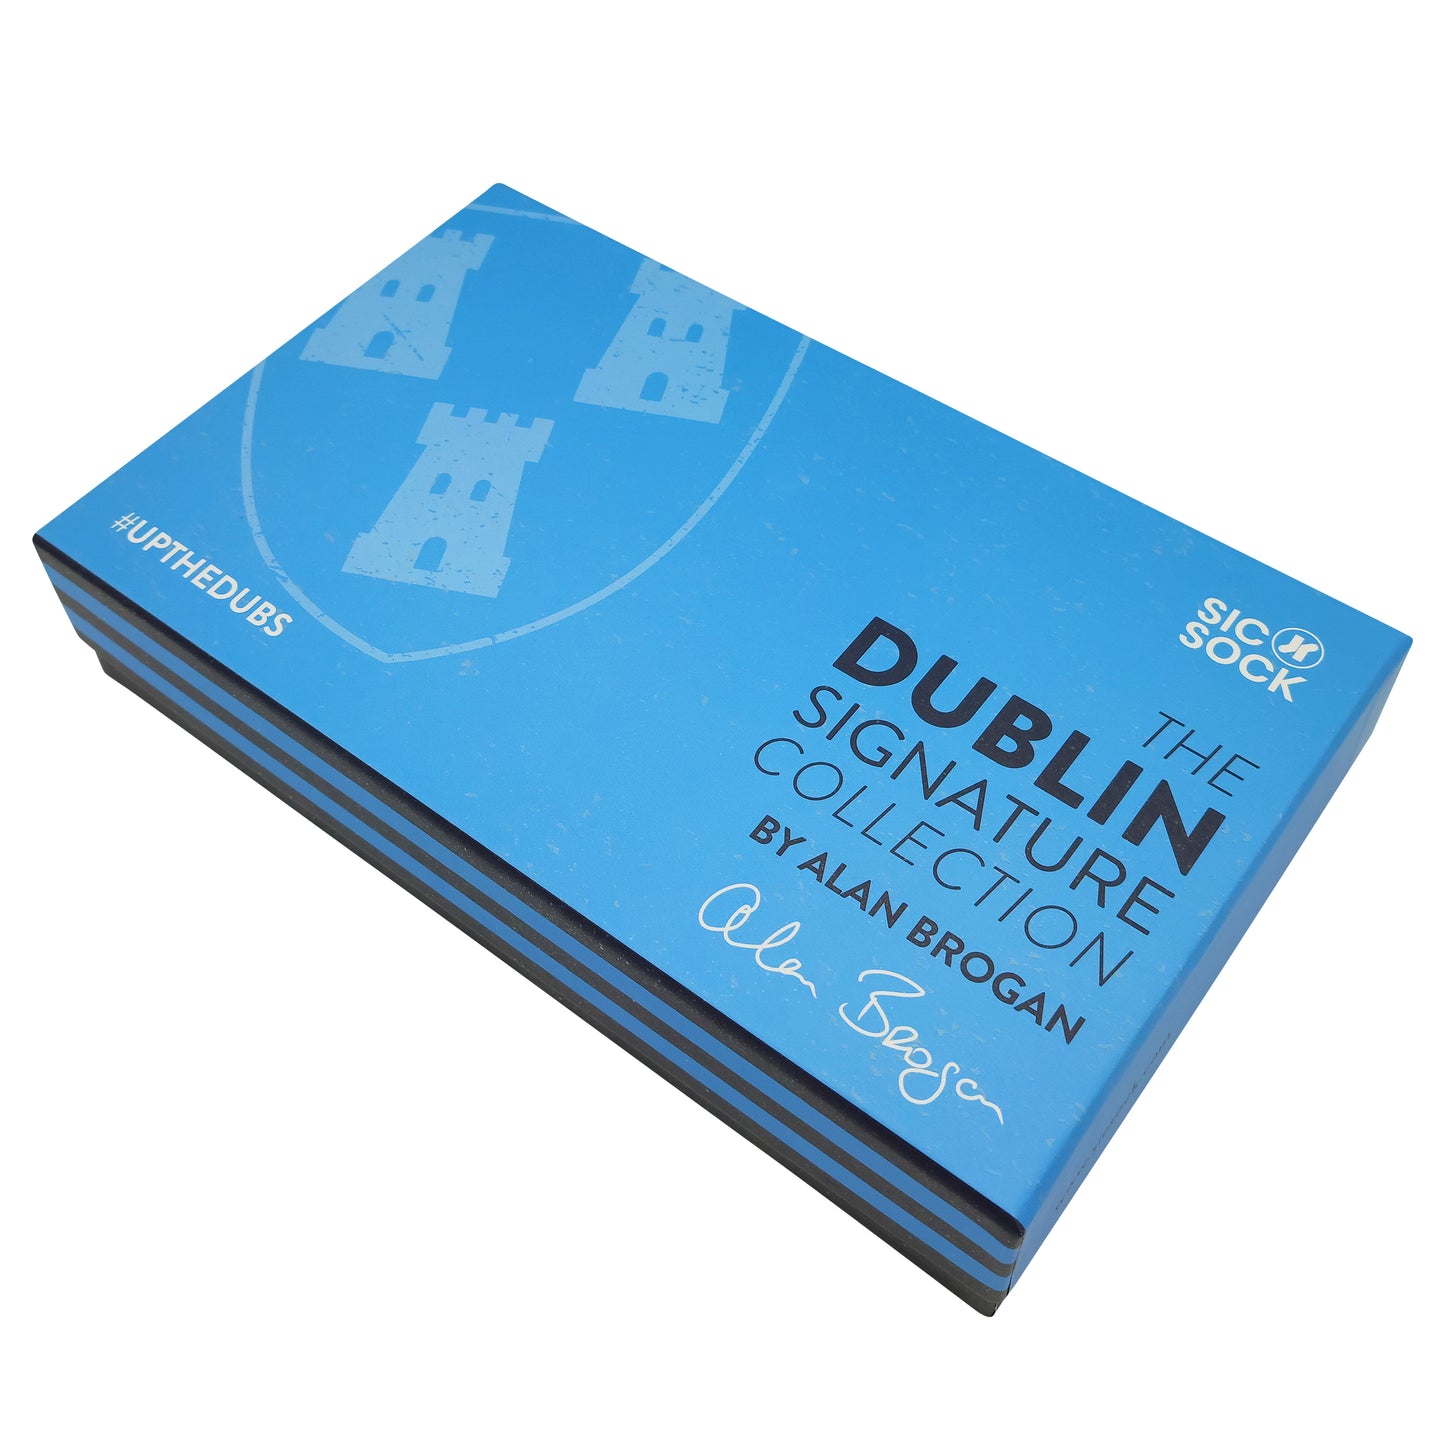 Dublin Retro Sock Gift Box | Designed By Alan Brogan UK 7 - 11